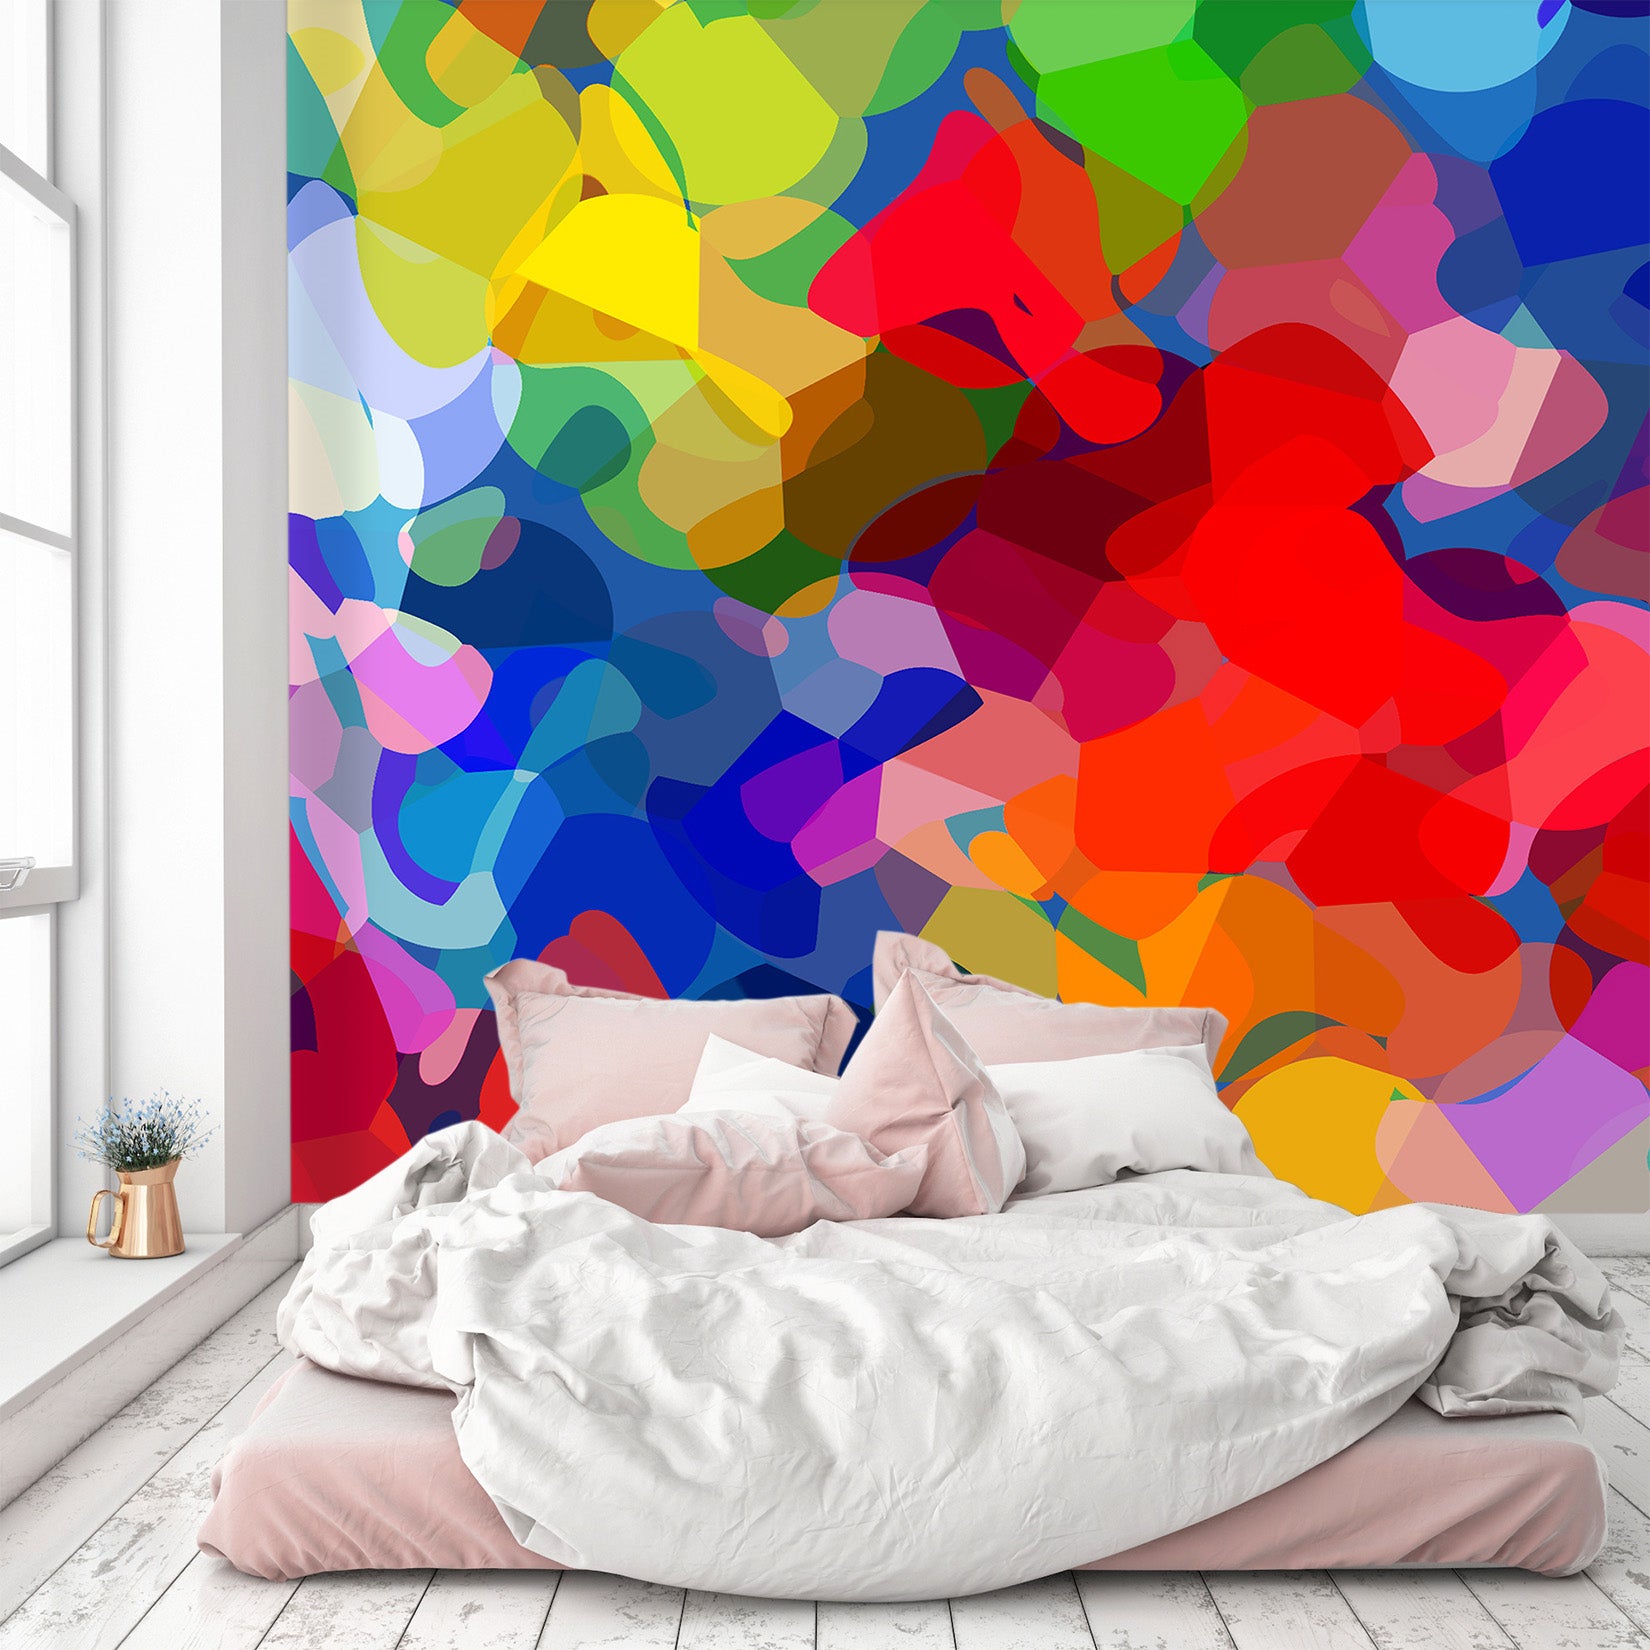 3D Bright Colors 1006 Shandra Smith Wall Mural Wall Murals